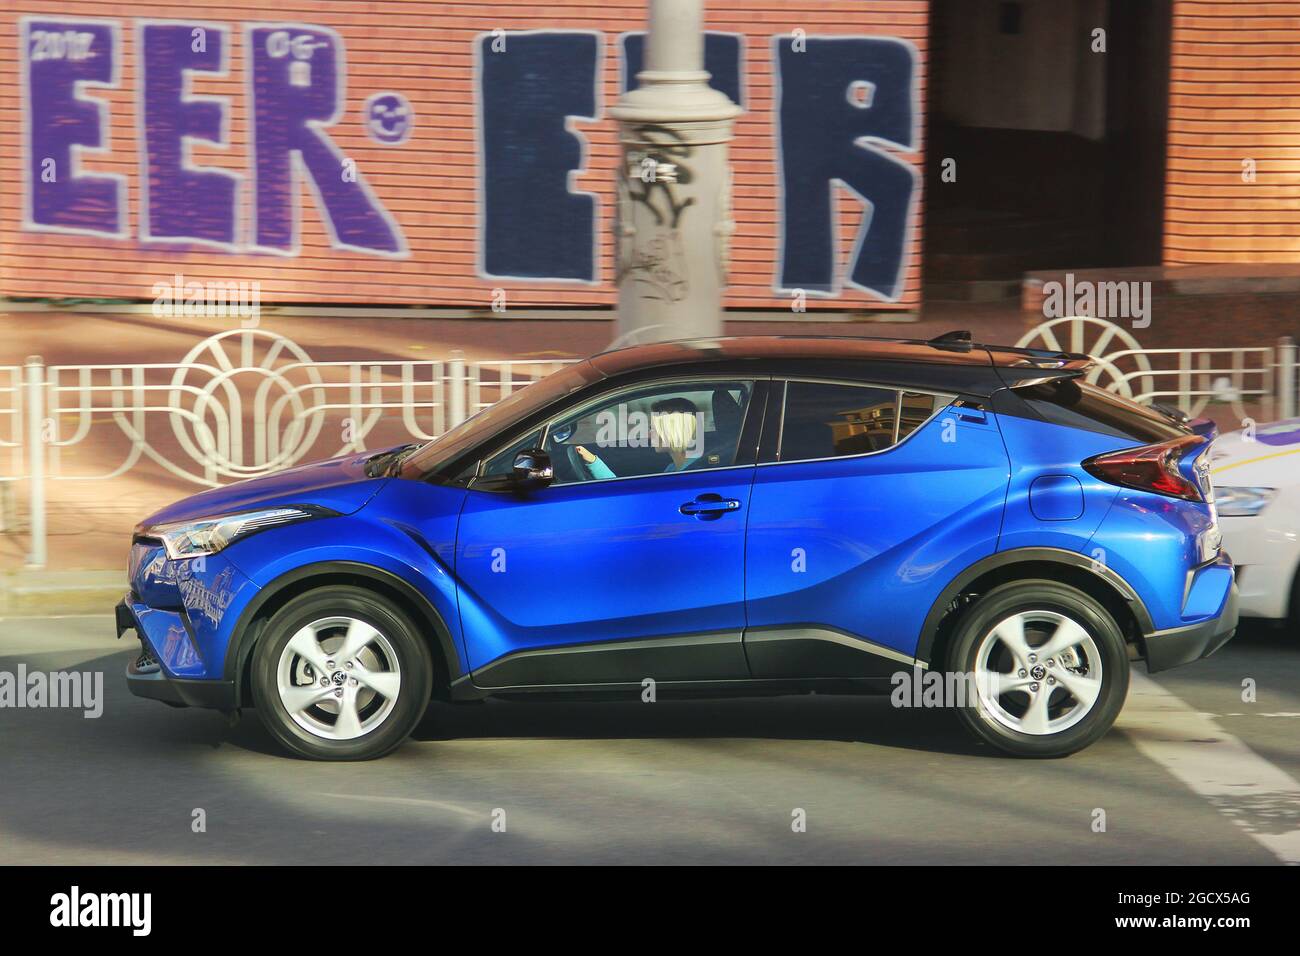 Blue car rental -Fotos und -Bildmaterial in hoher Auflösung – Alamy